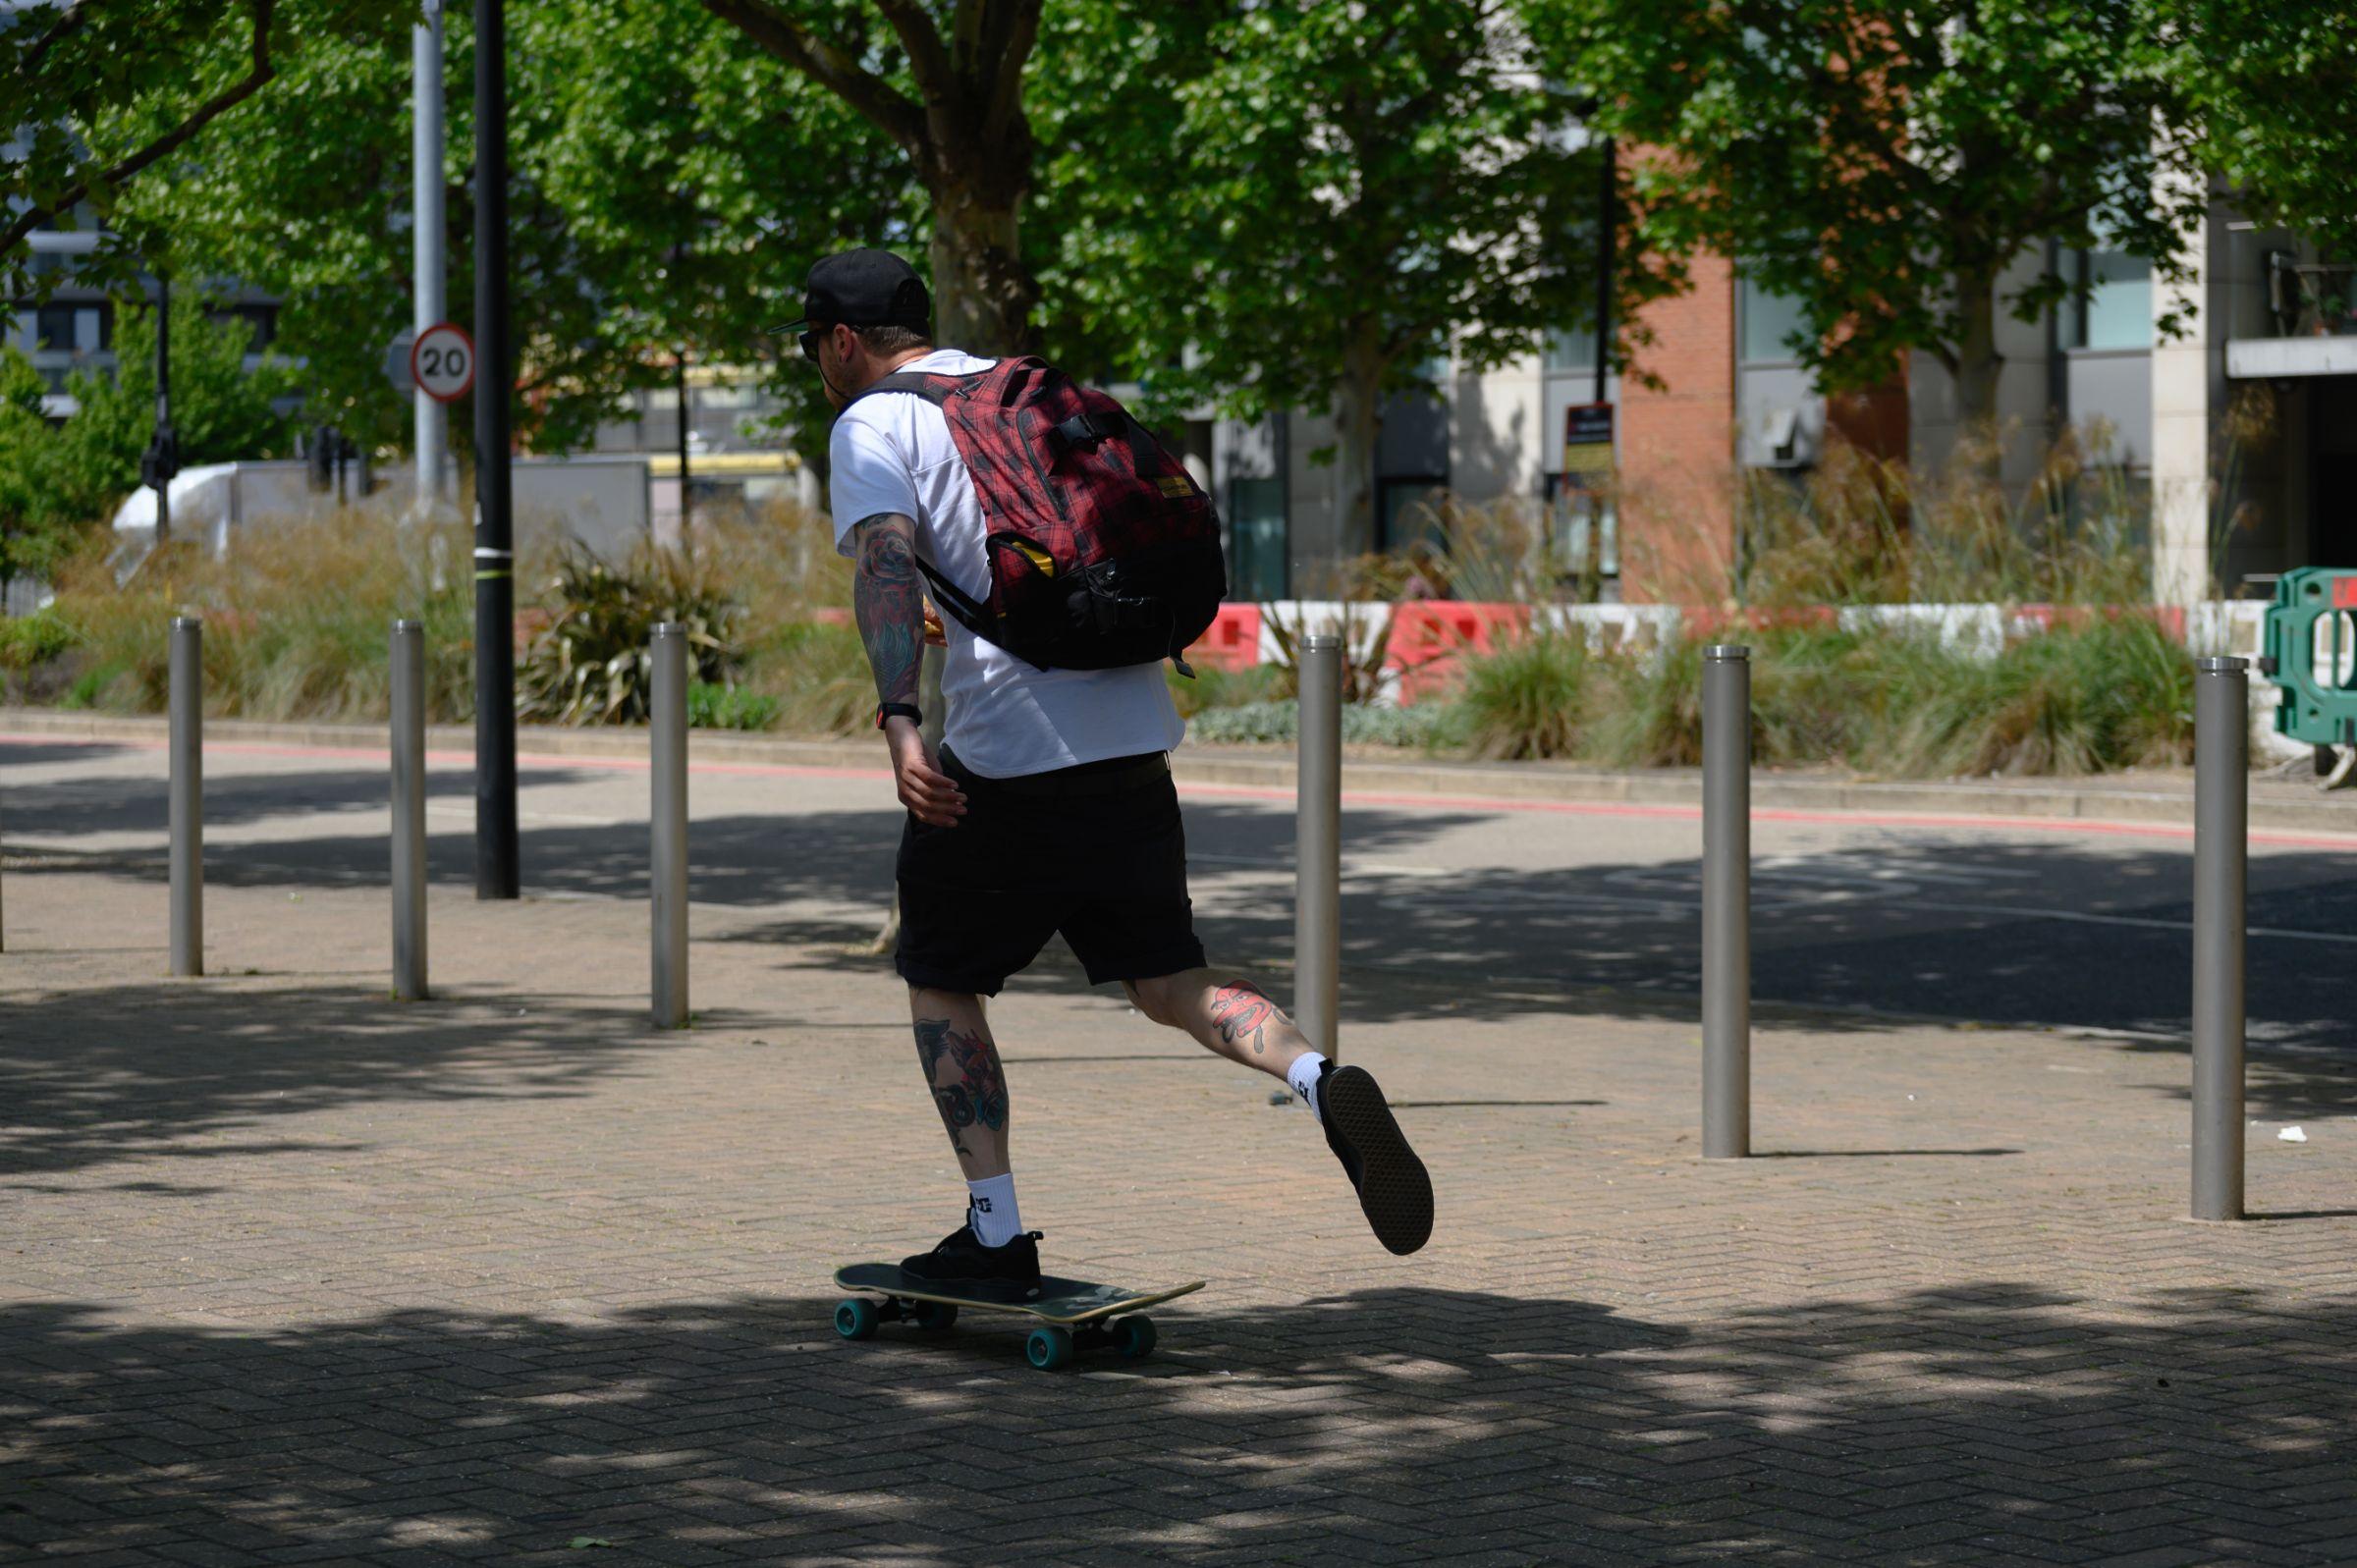 Man riding on a skateboard near the Royal Docks